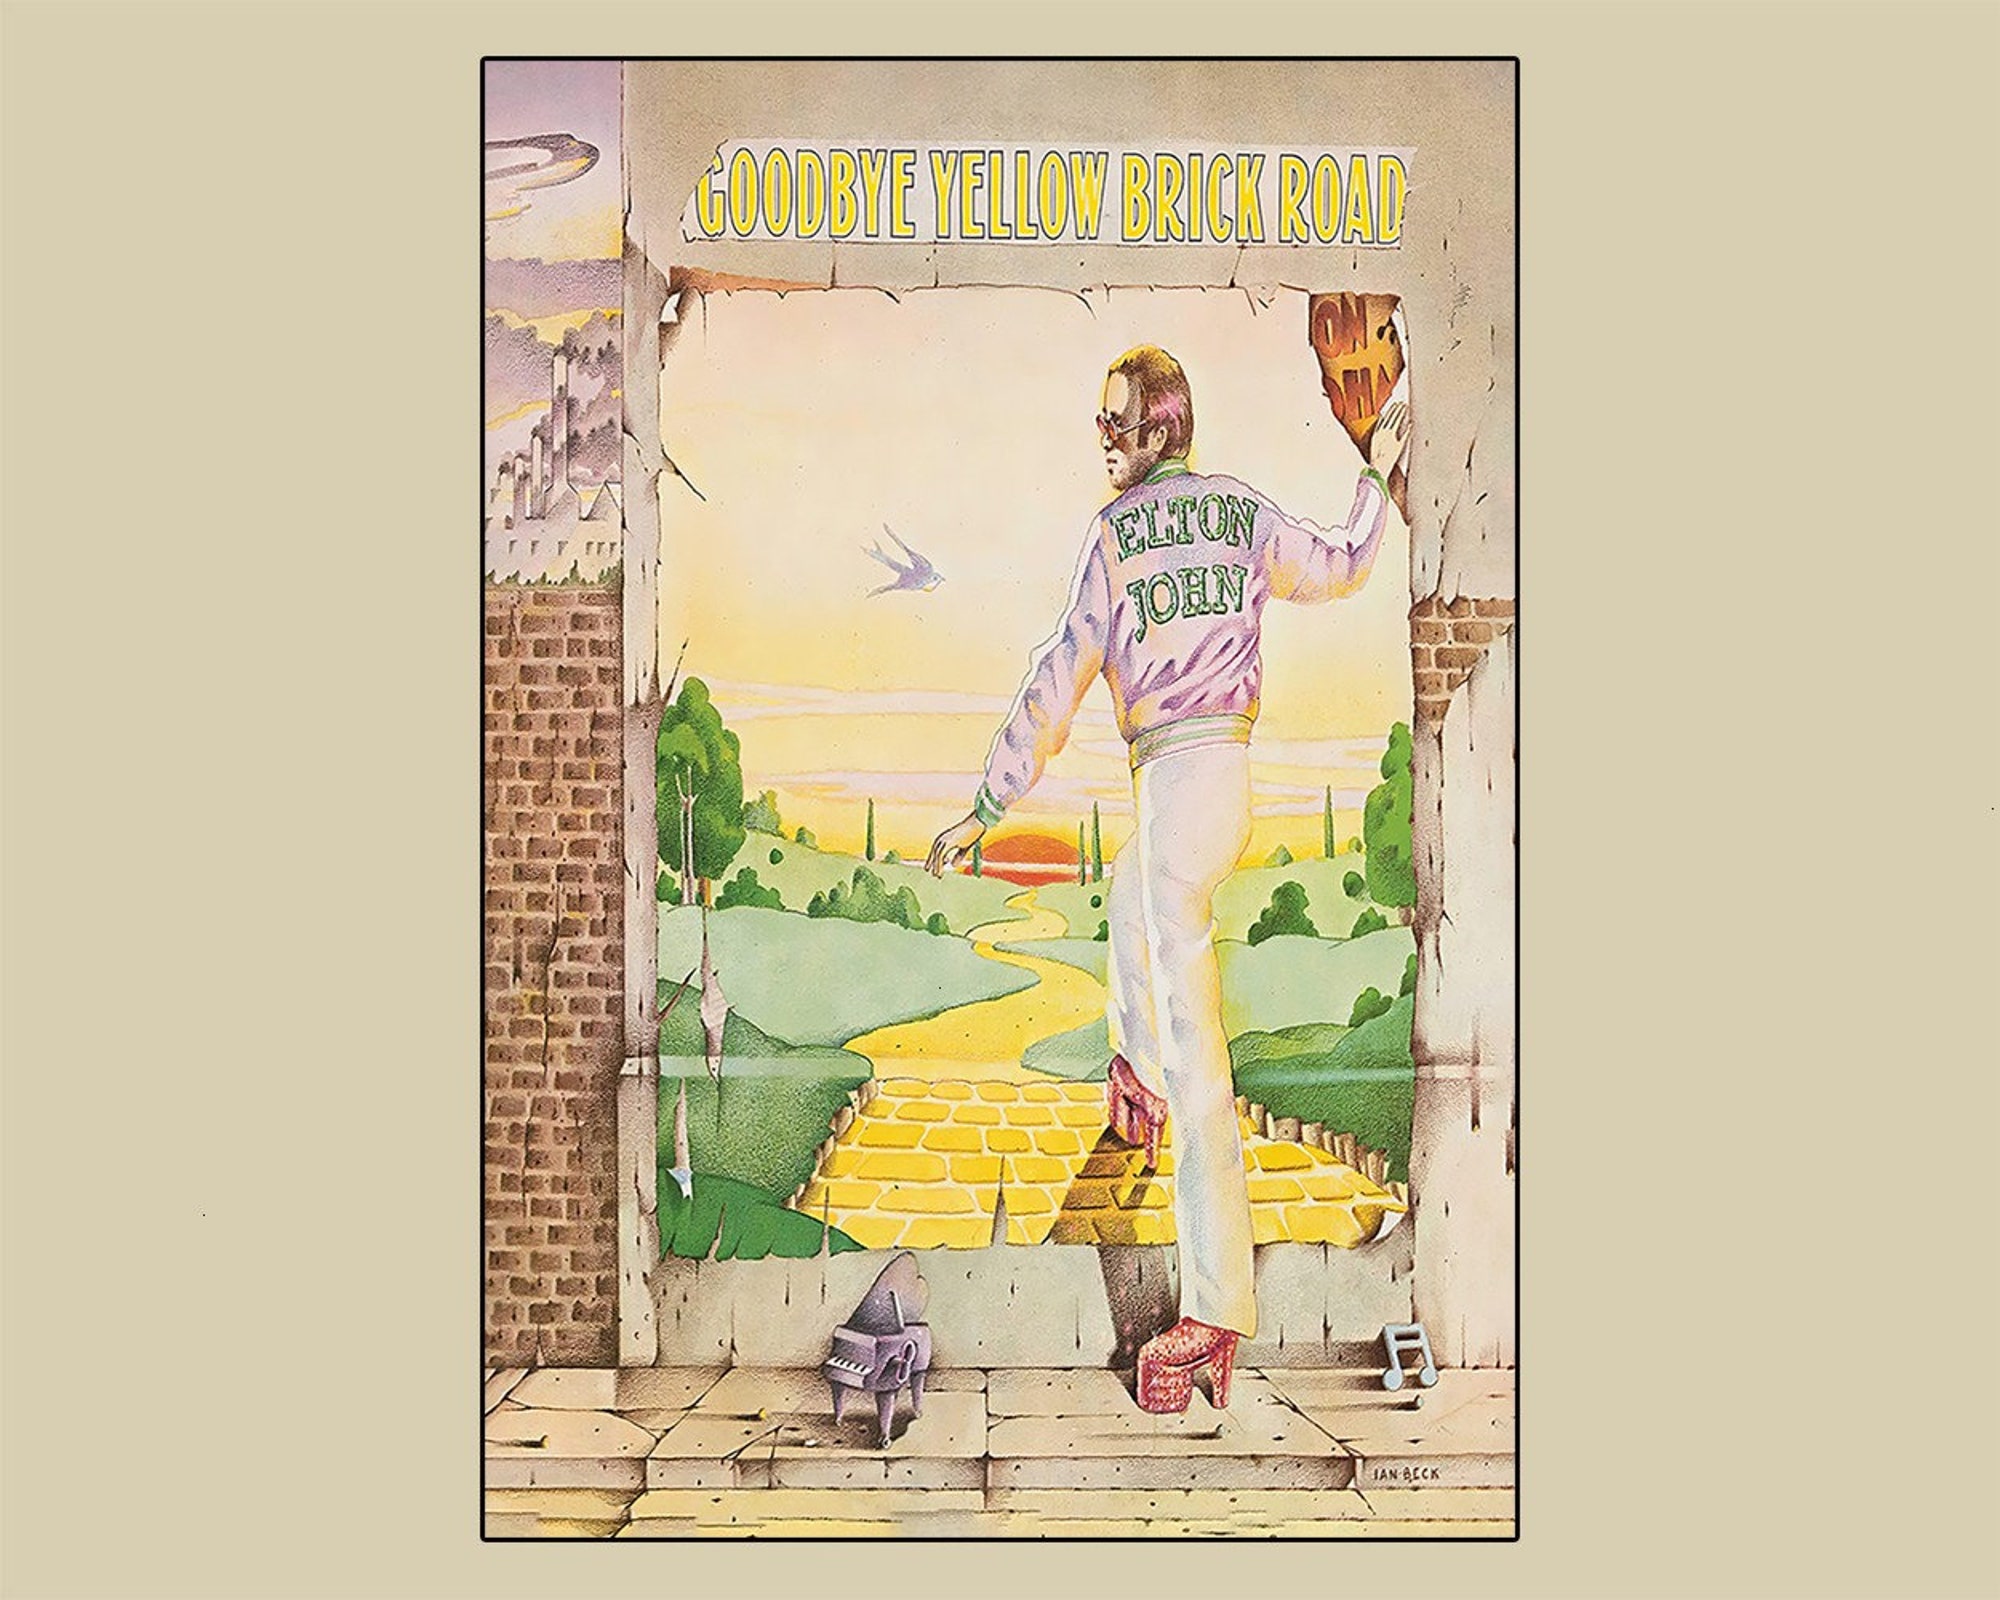 Elton John - Goodbye Yellow Brick Road Album Cover Fan Lover Poster